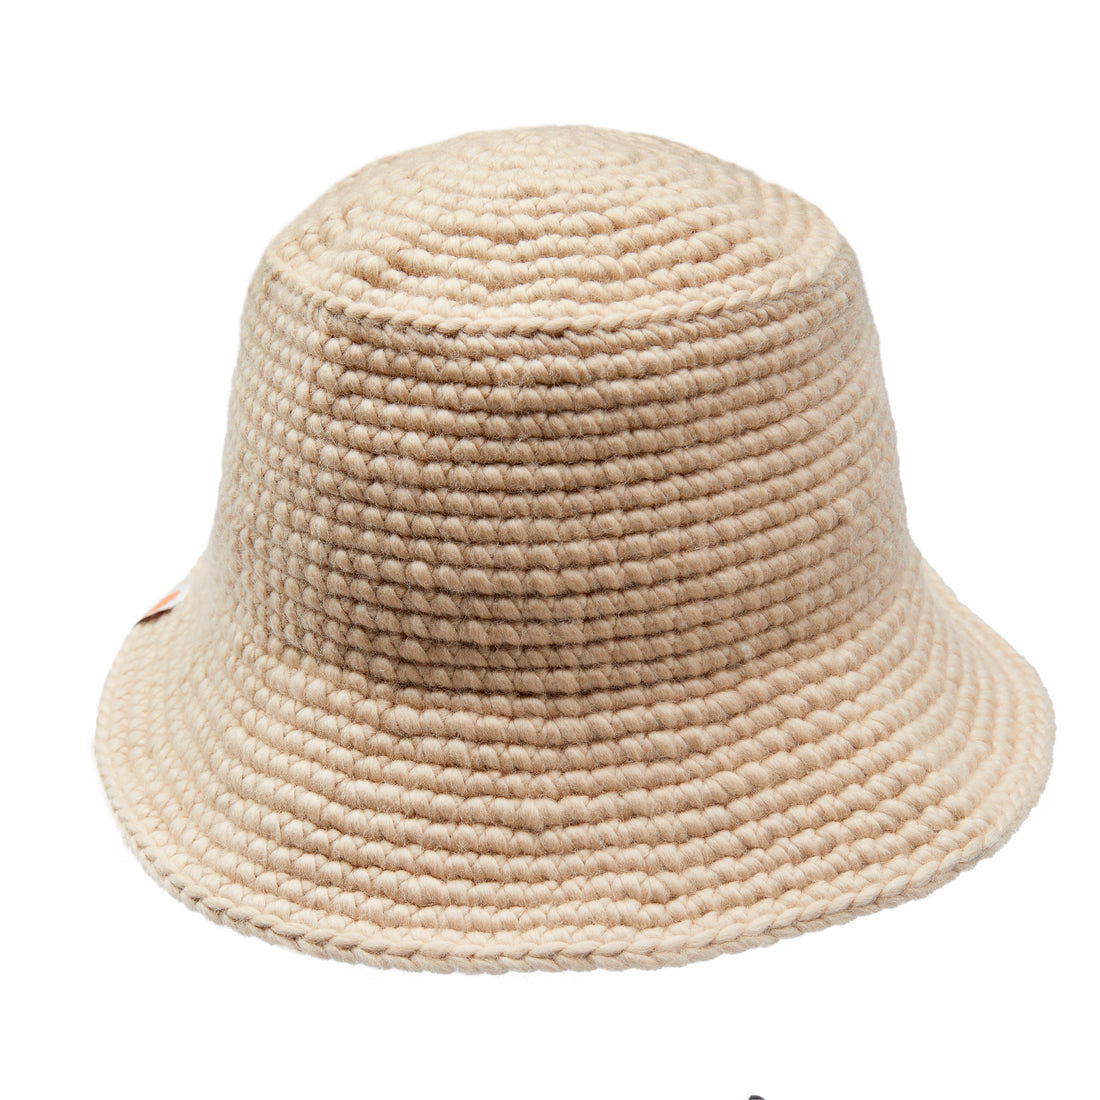 Bucket Hats, Cotton and Wool Bucket Hats